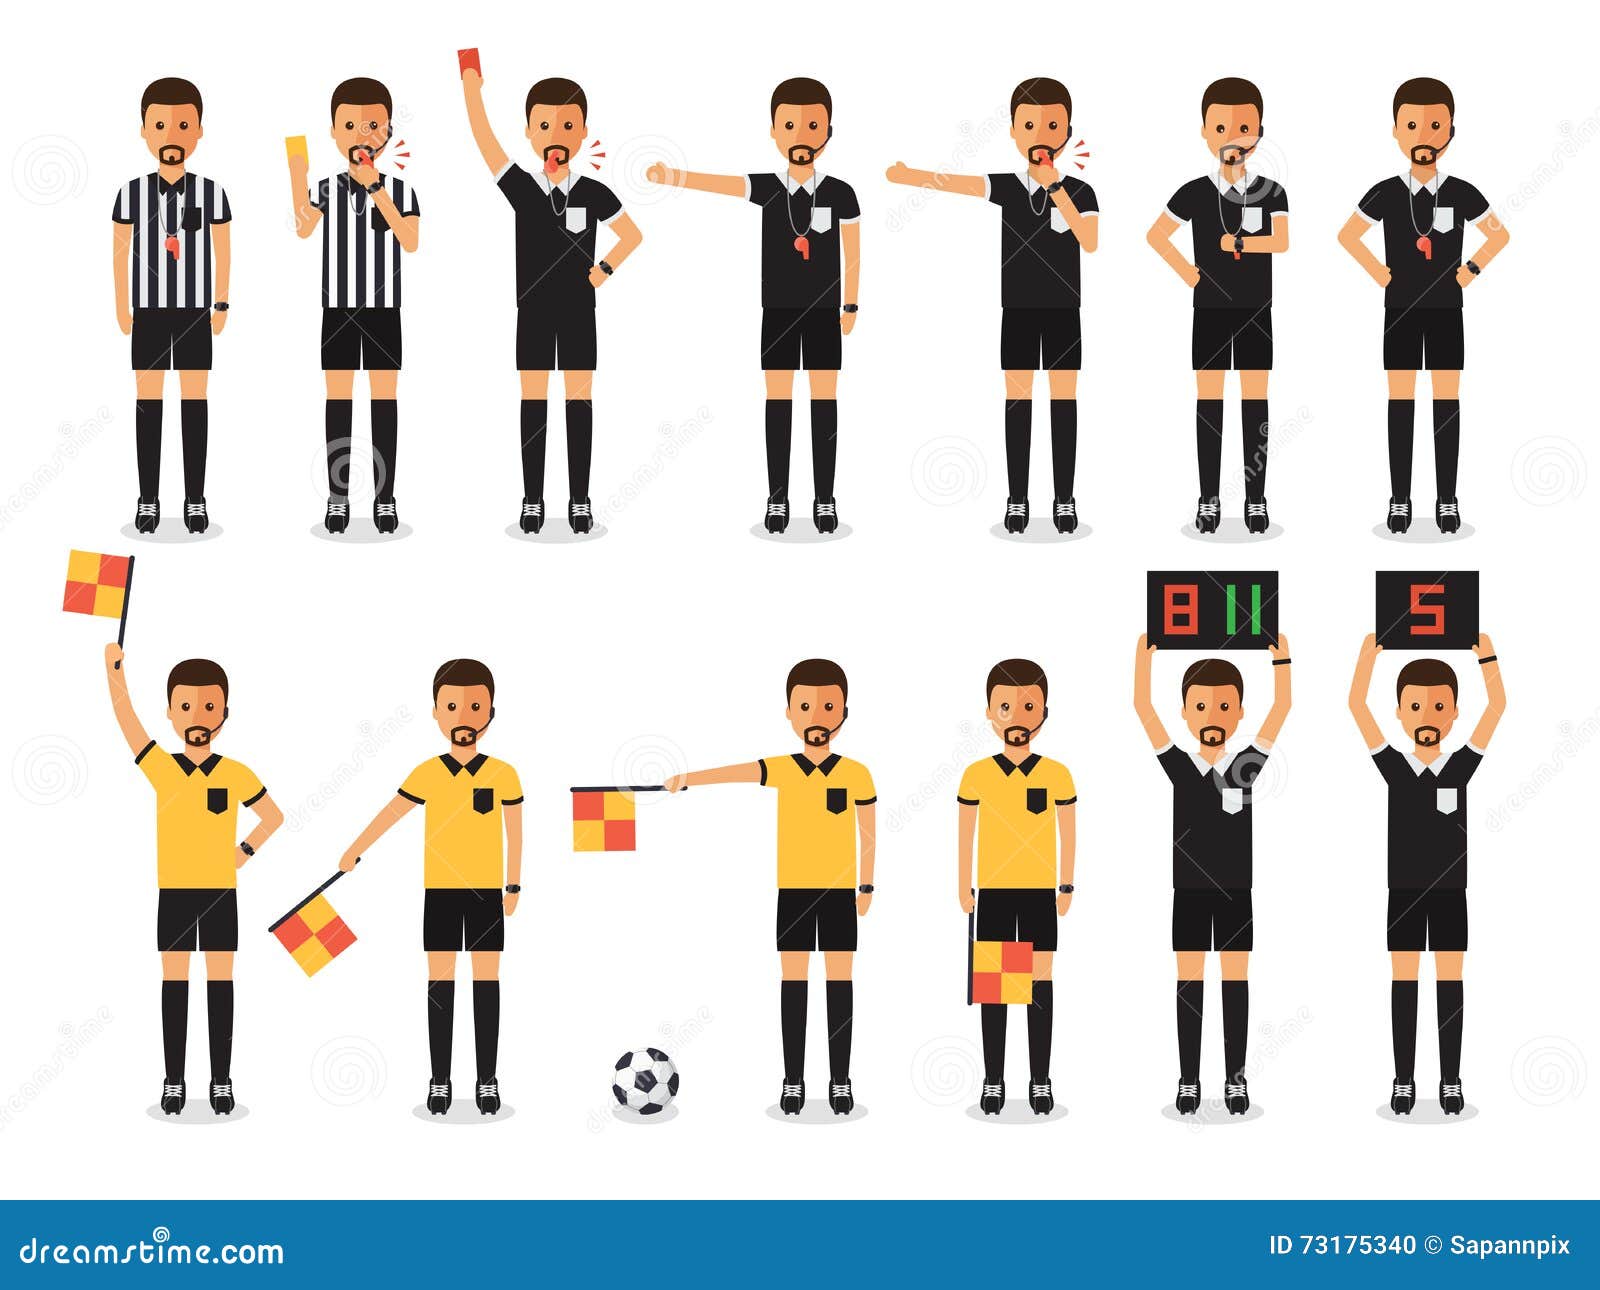 Soccer Referee Character Set Vector Illustration | CartoonDealer.com ...